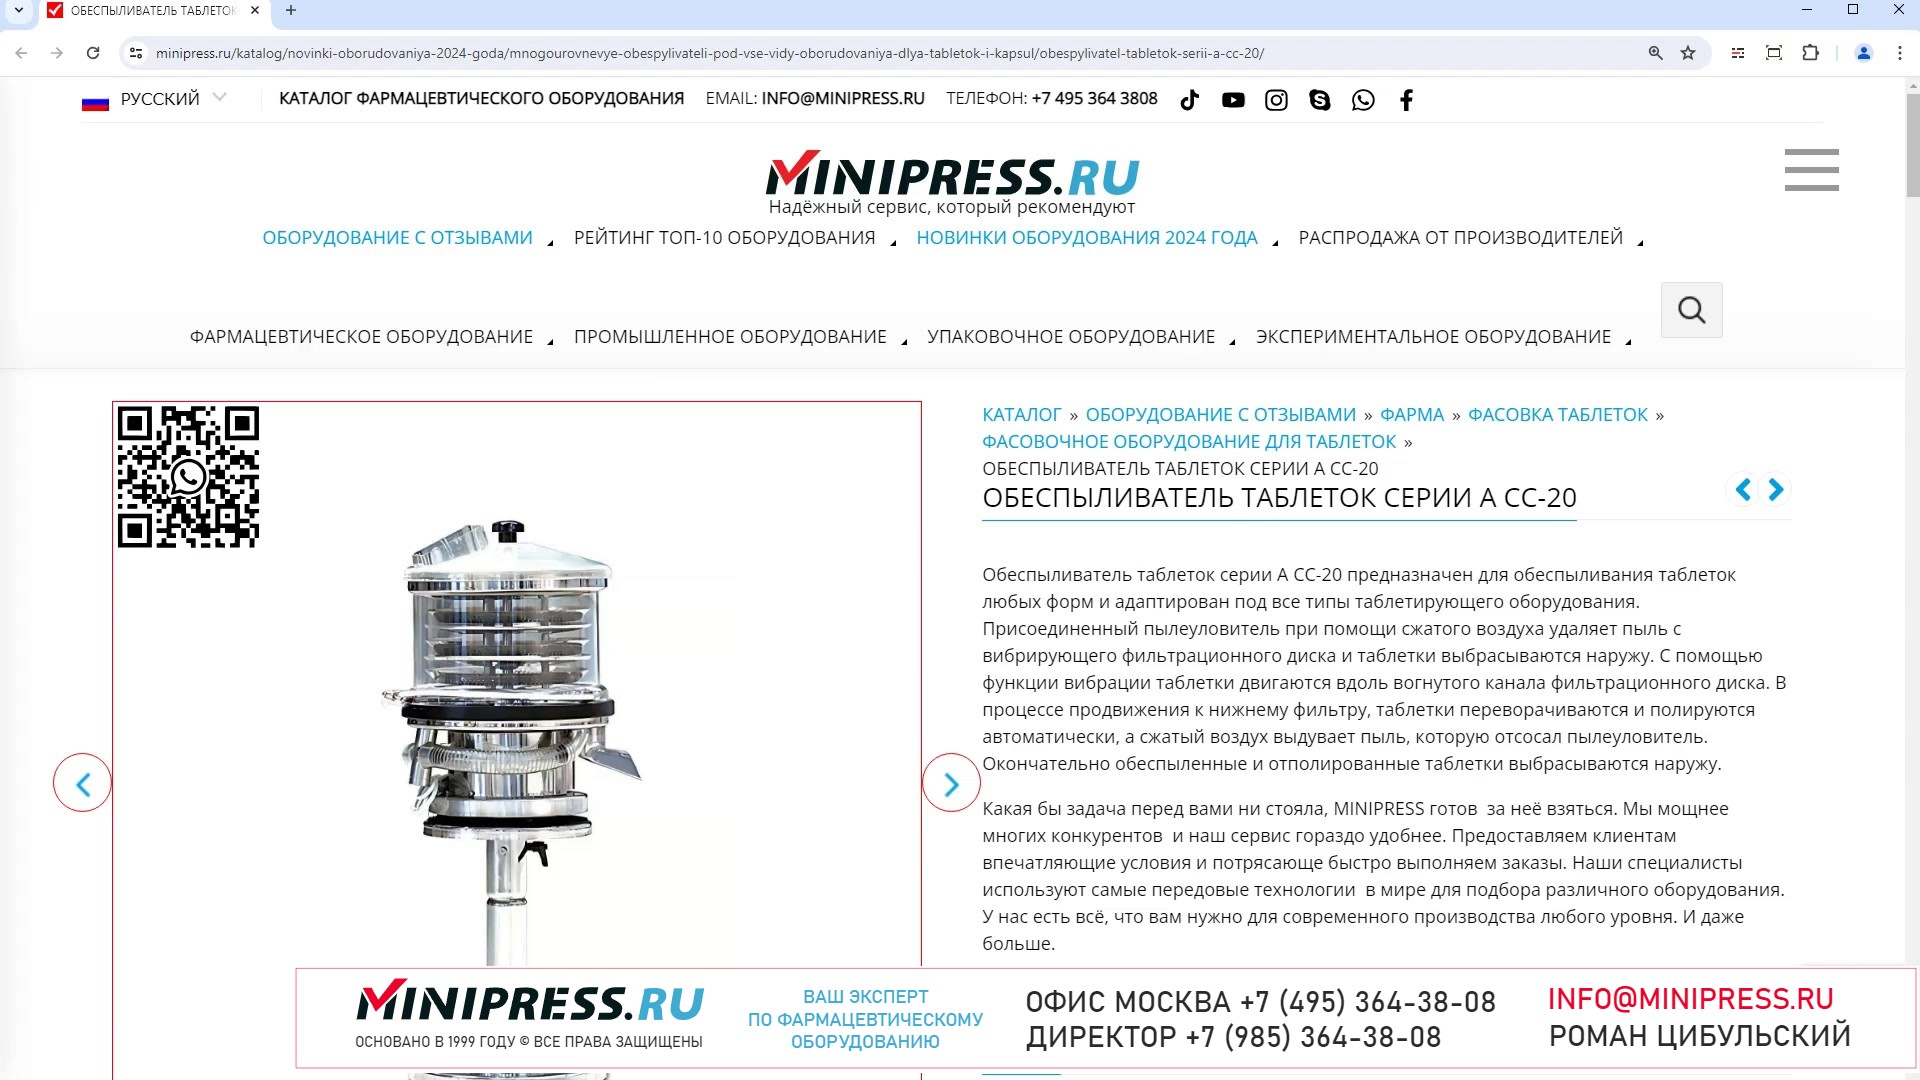 Minipress.ru Обеспыливатель таблеток серии А CC-20